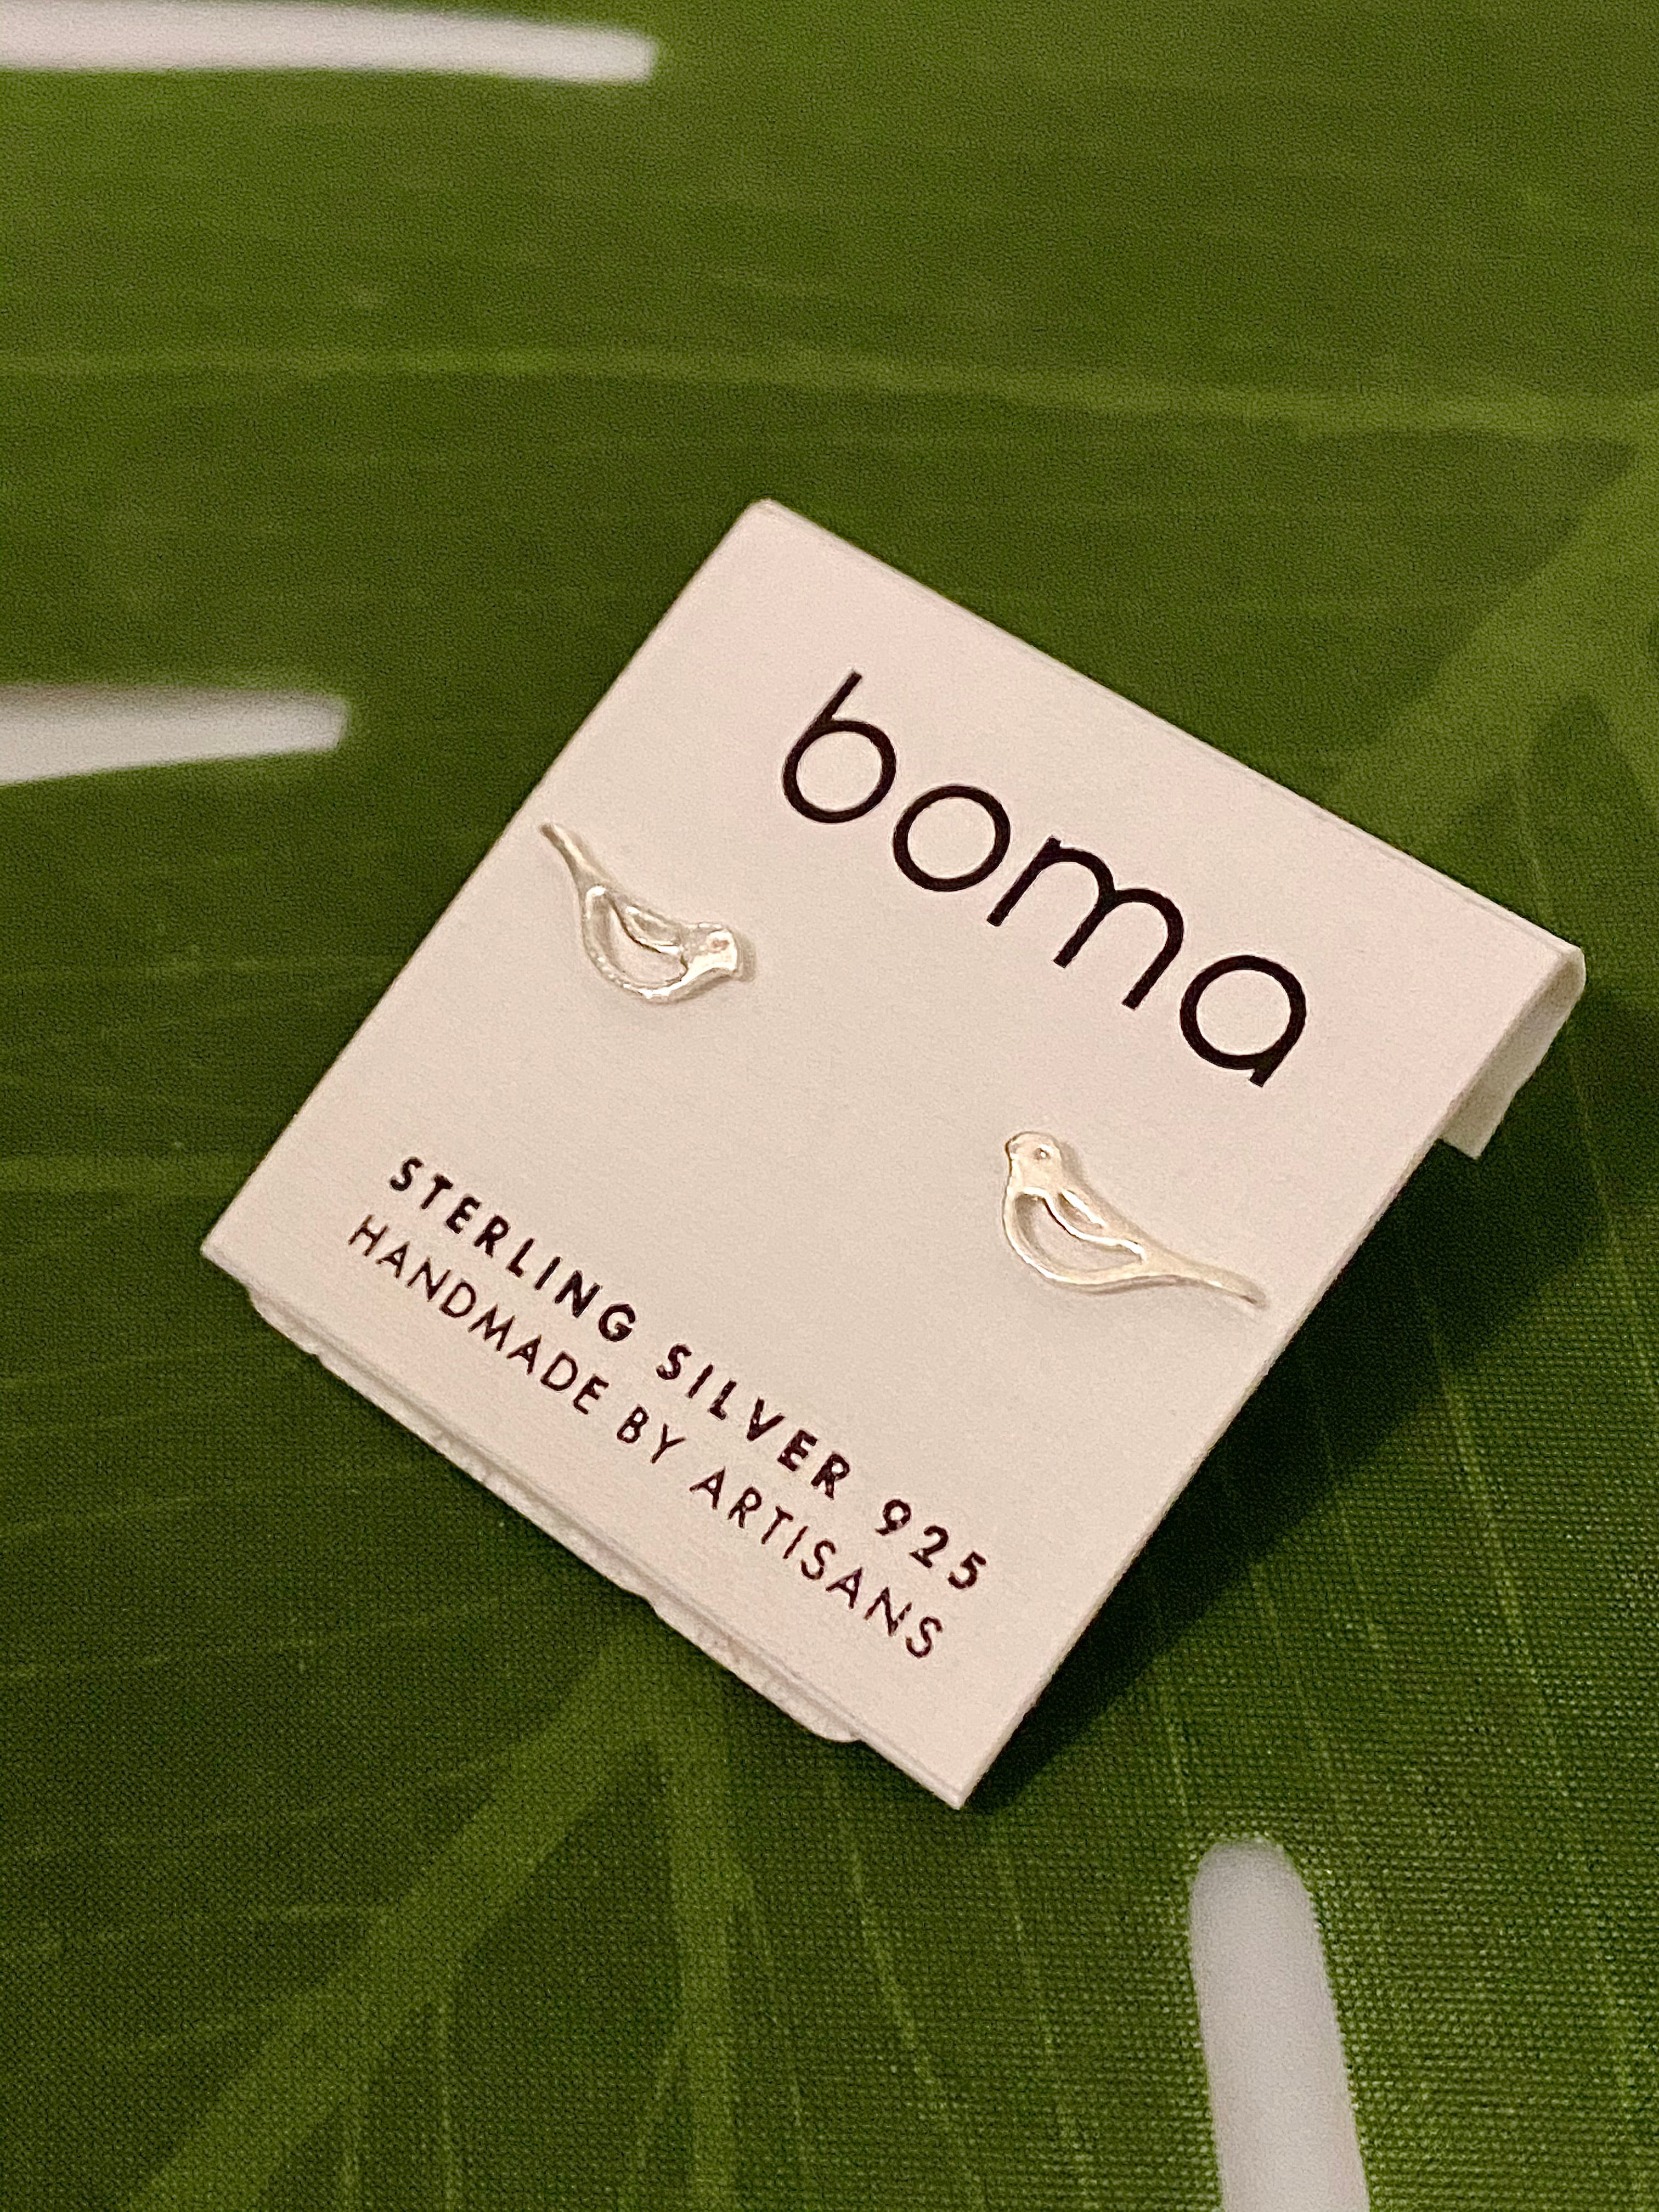 Boma Sterling Silver Post Earrings - Bird Outline    